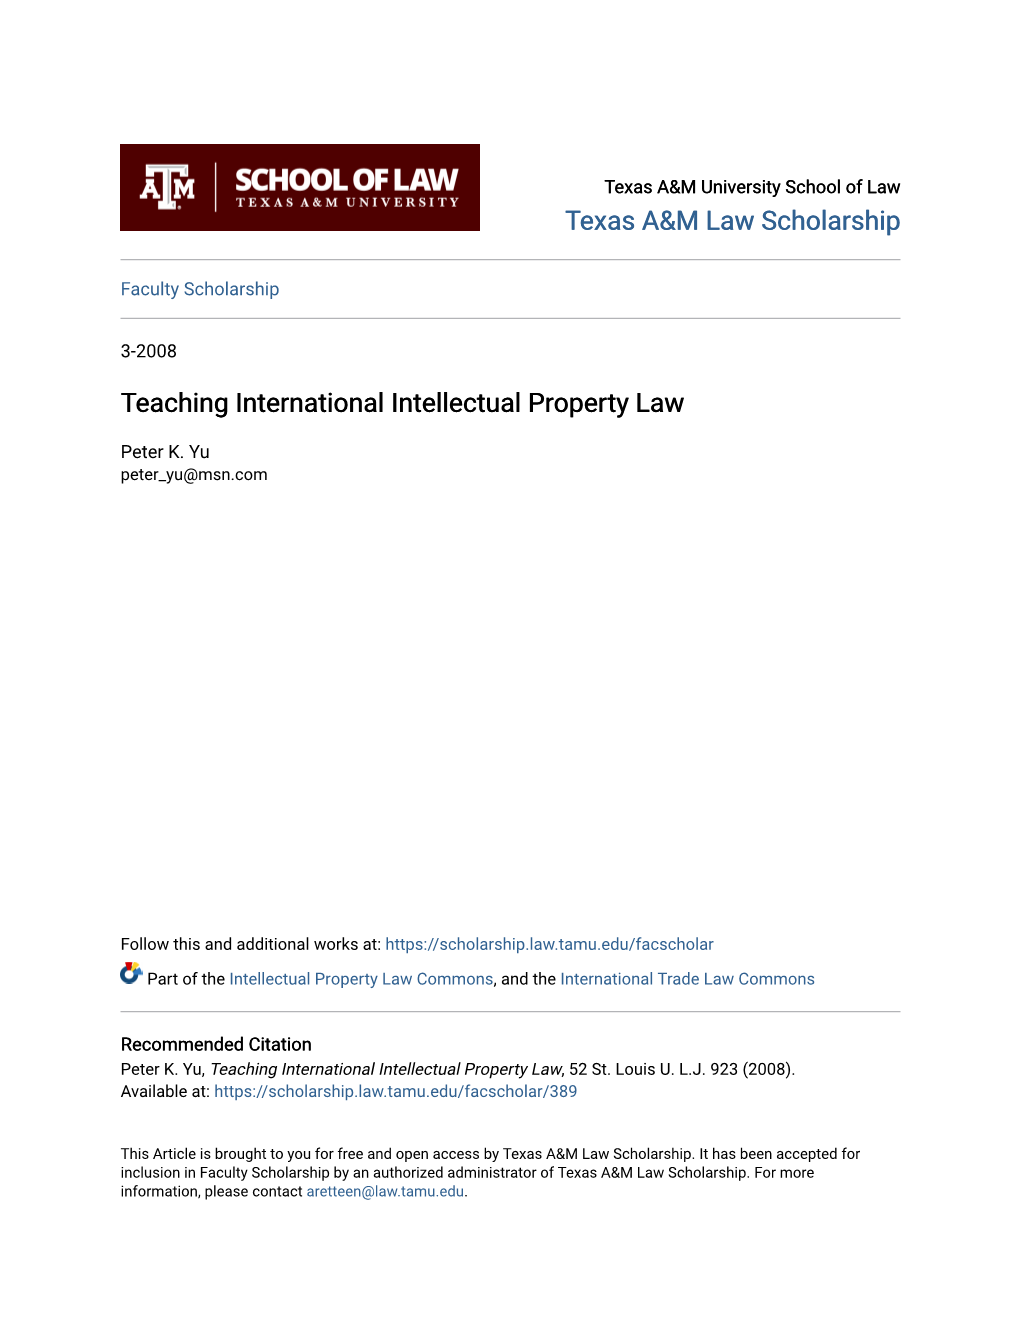 Teaching International Intellectual Property Law